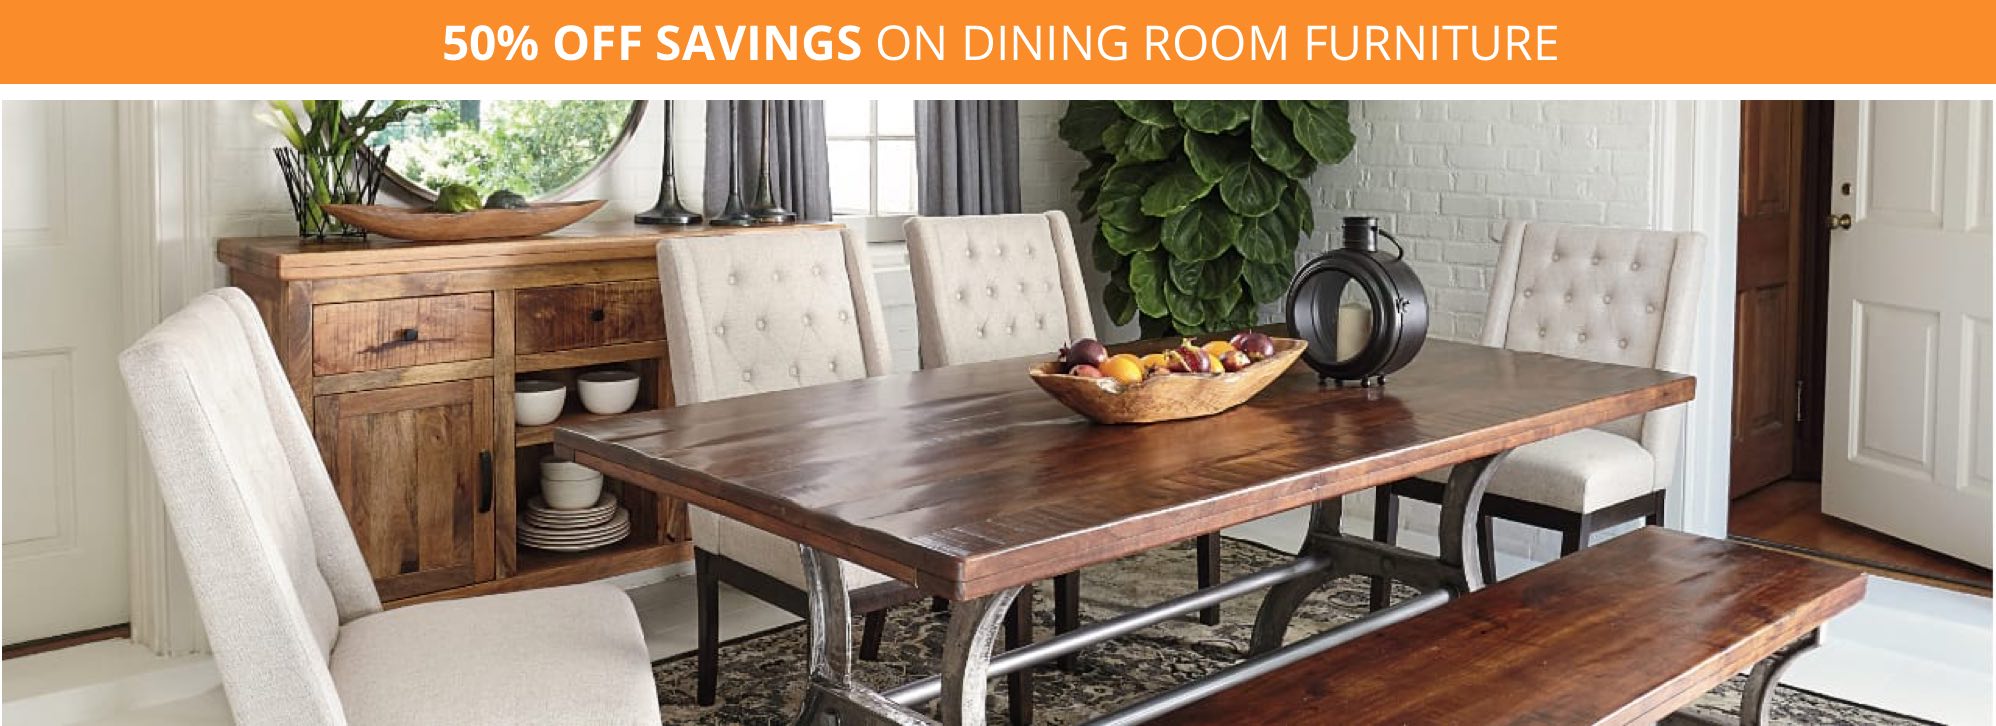 50% off savings on dining room furniture